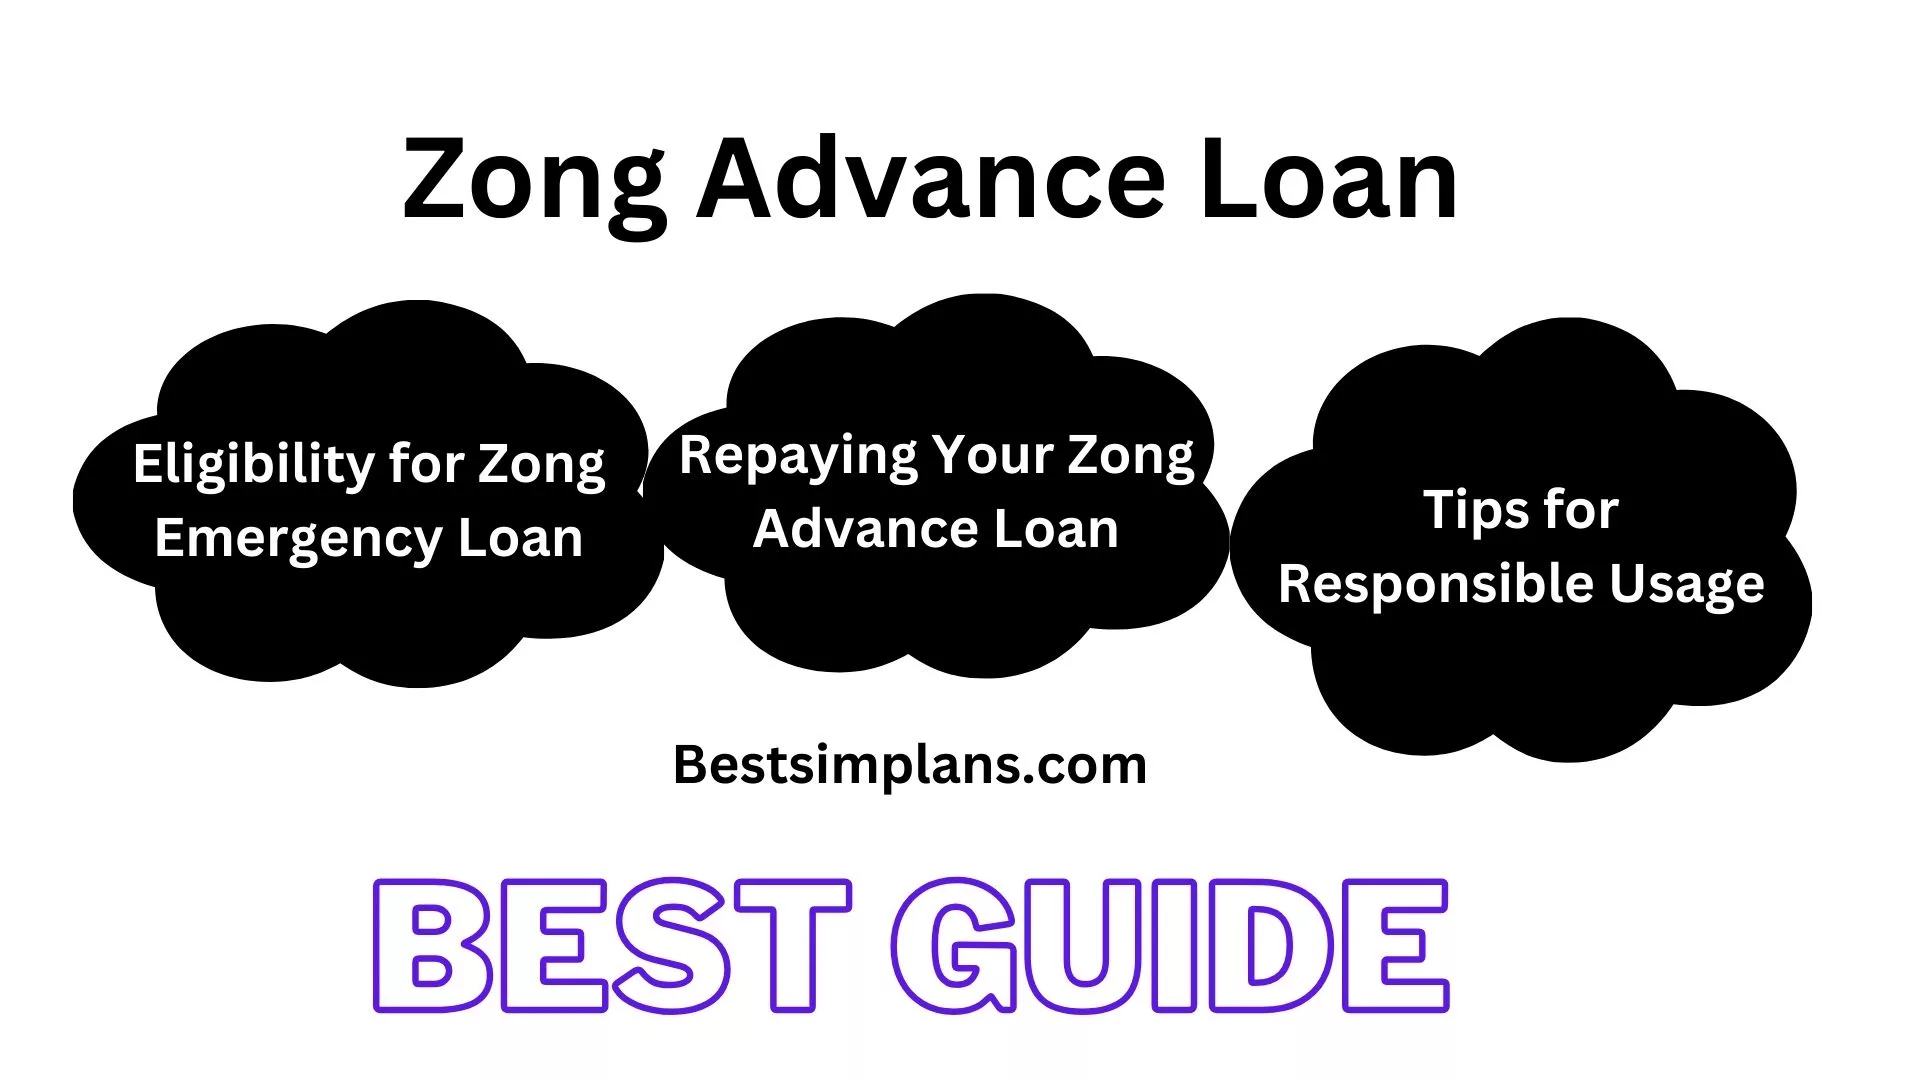 Zong Advance Loan